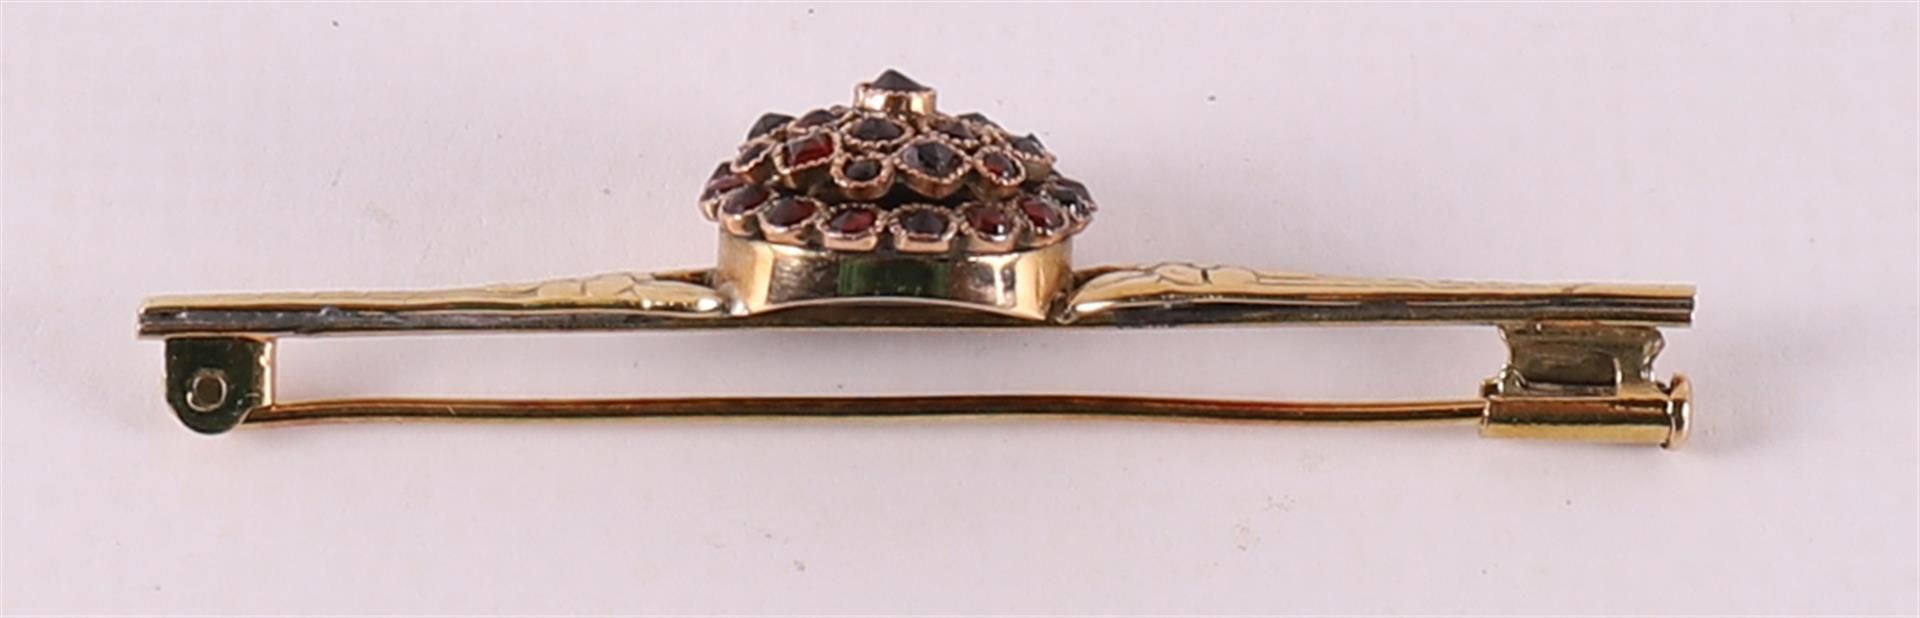 A 14 carat gold brooch set with many faceted garnets, around 1900. - Bild 2 aus 2